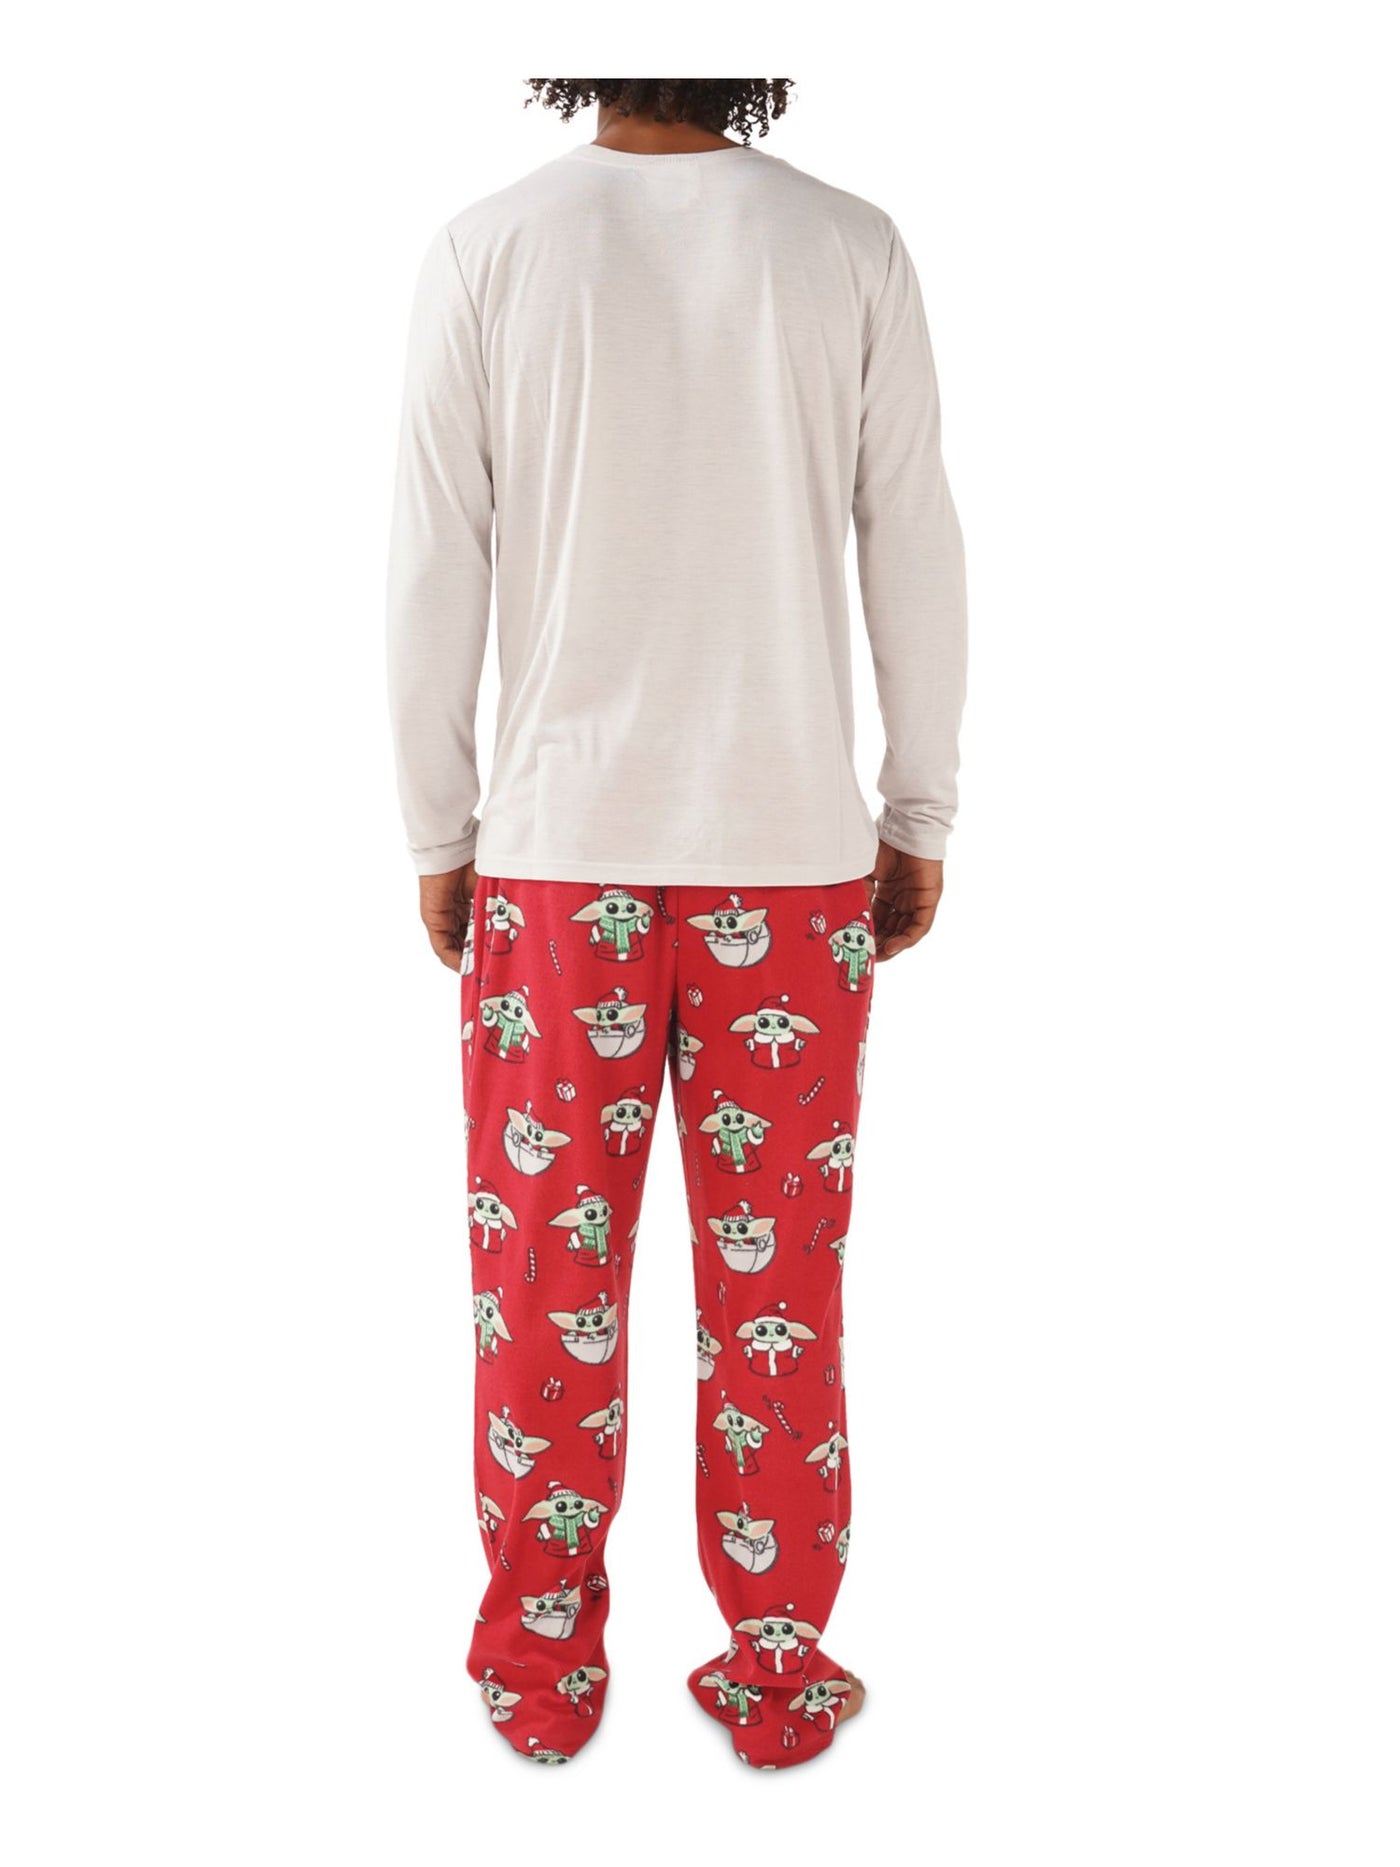 MUNKI MUNKI Mens Red Graphic Top Elastic Band Long Sleeve Straight leg Pants Pajamas M